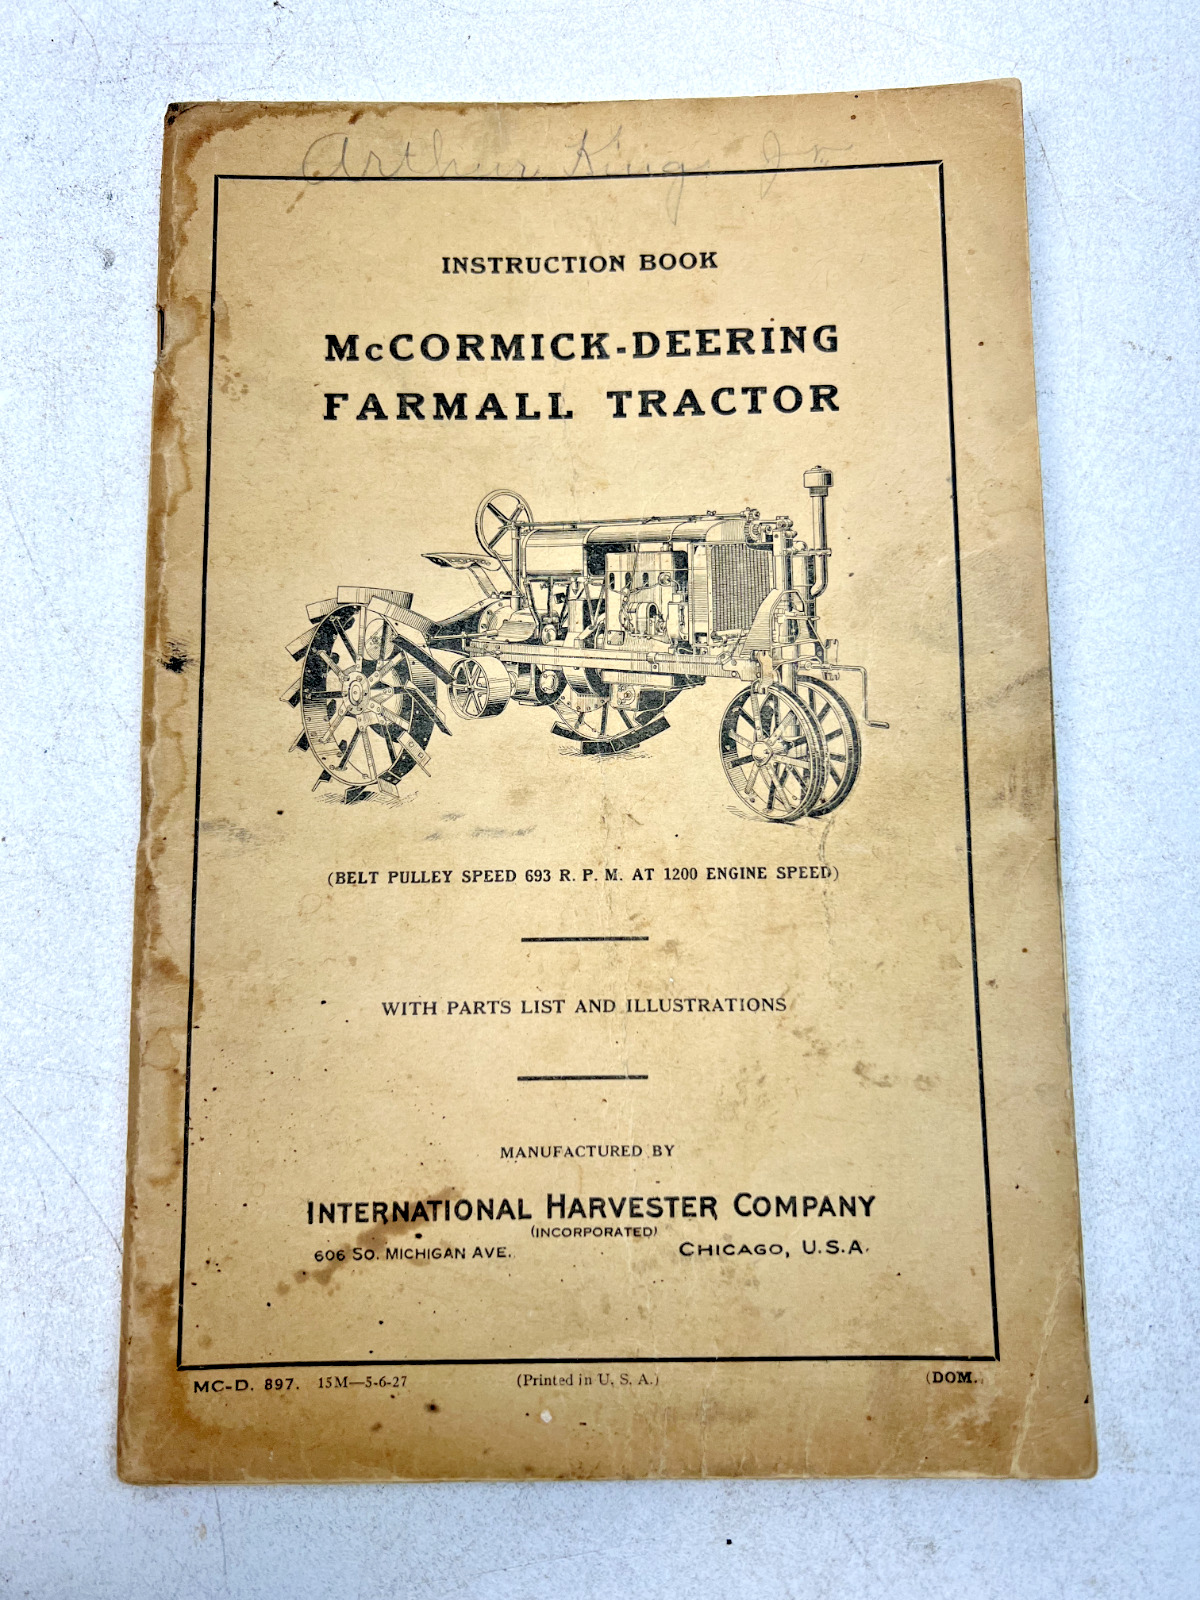 Vintage 1927 IH McCormick-Deering Farmall Tractor Instruction Book